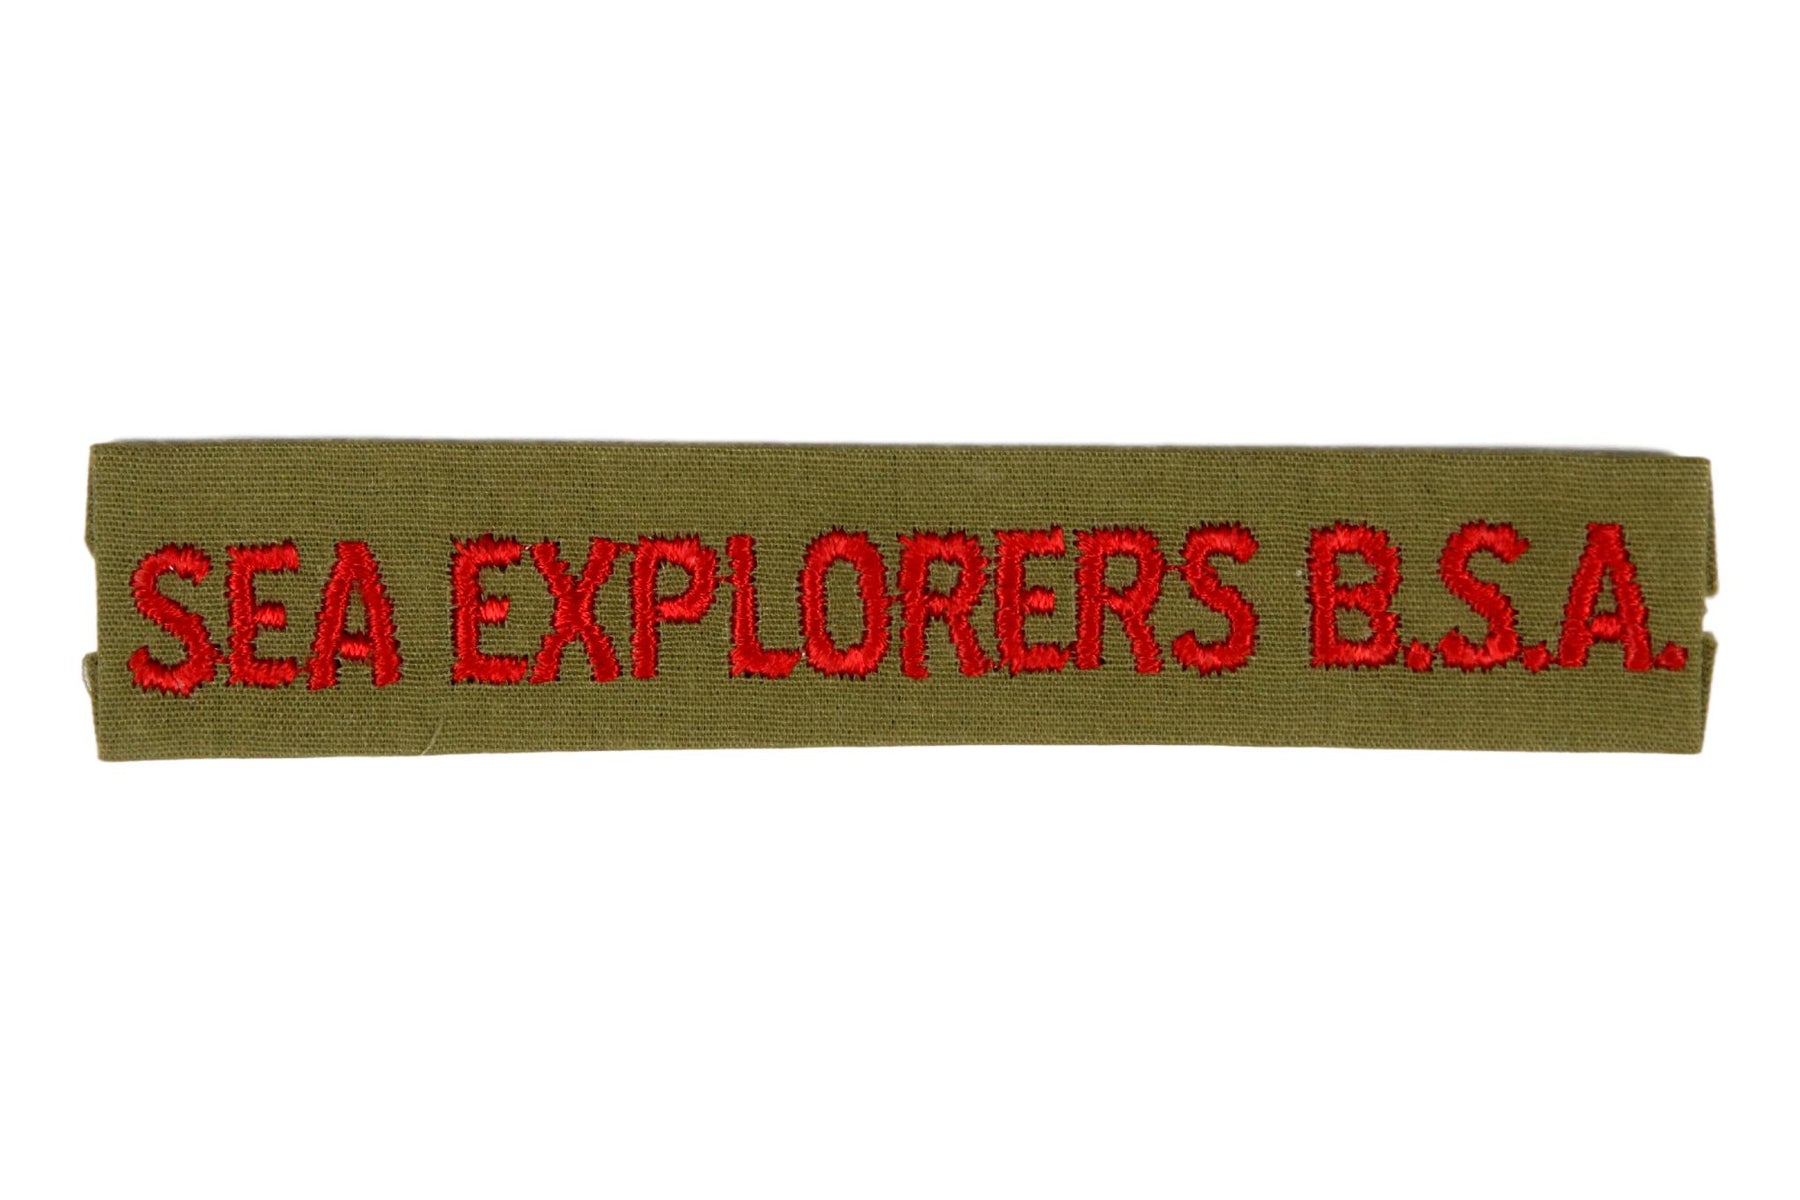 Sea Explorers B.S.A. Shirt Strip on Khaki